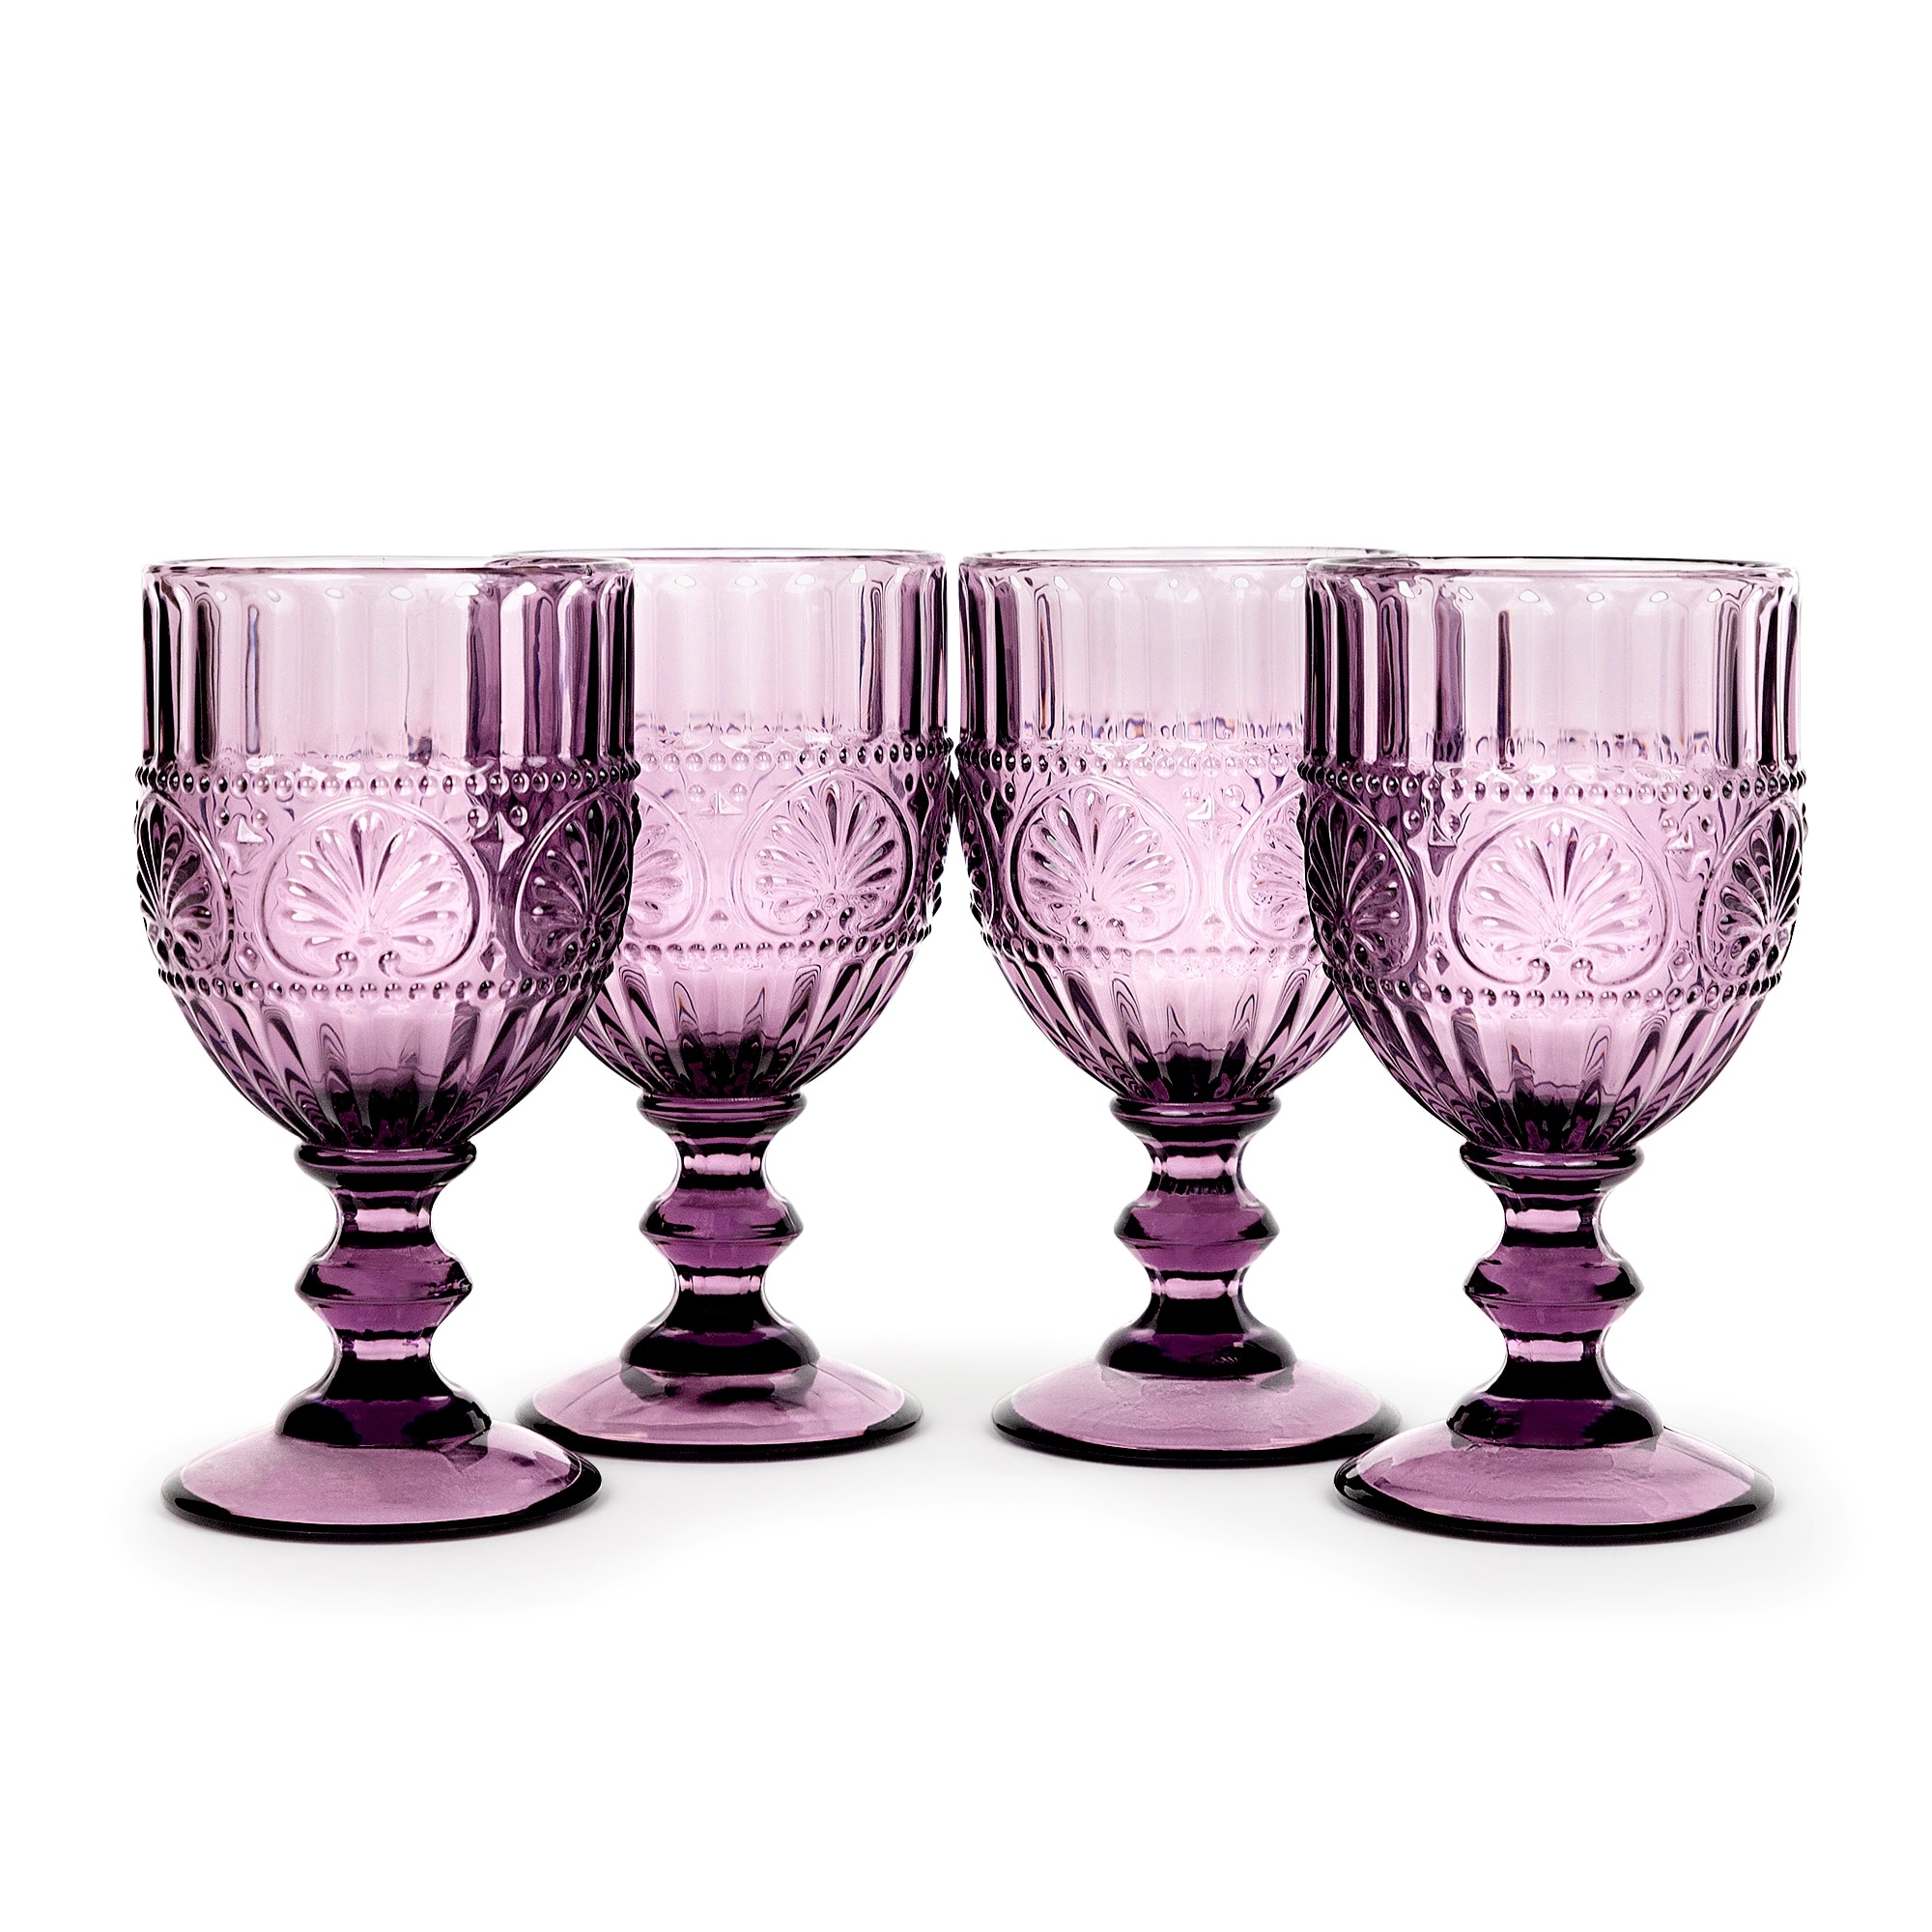 https://ak1.ostkcdn.com/images/products/is/images/direct/ef6815ce7a1e38259a8da6e1ca76fa943a980e49/American-Atelier-Vintage-Purple-Wine-Glasses-Set-of-4.jpg